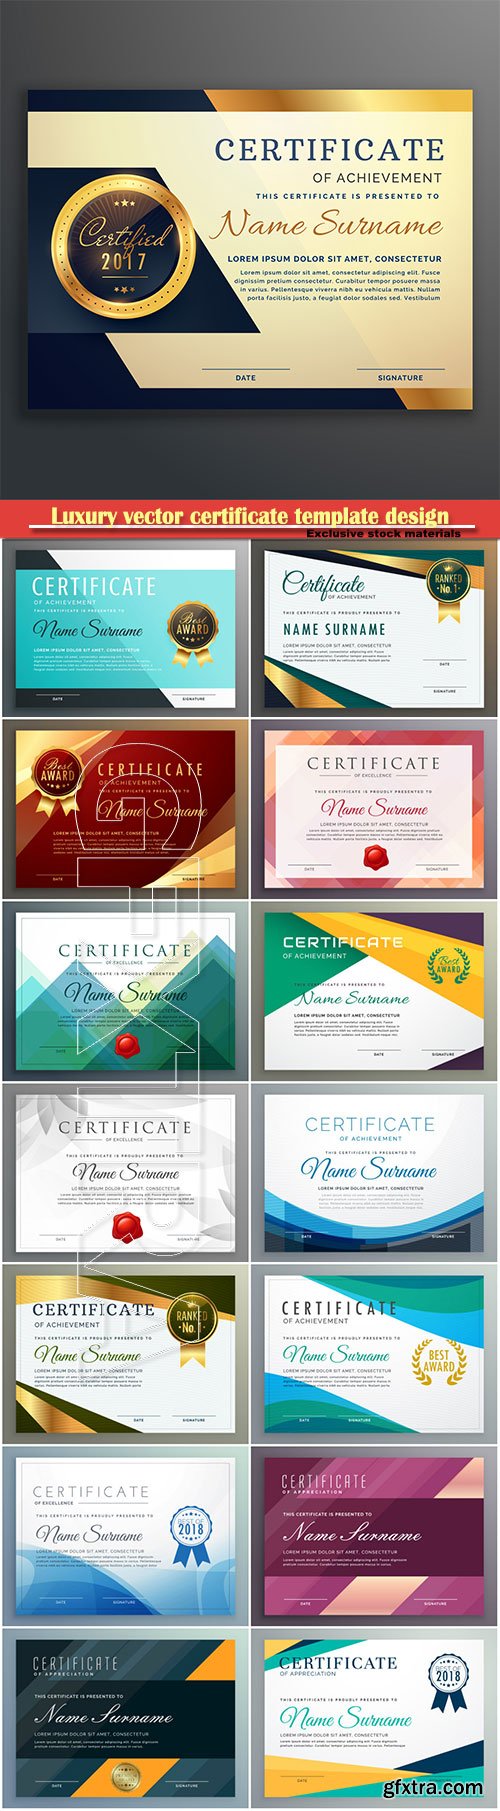 Luxury vector certificate template design in geometric shape style